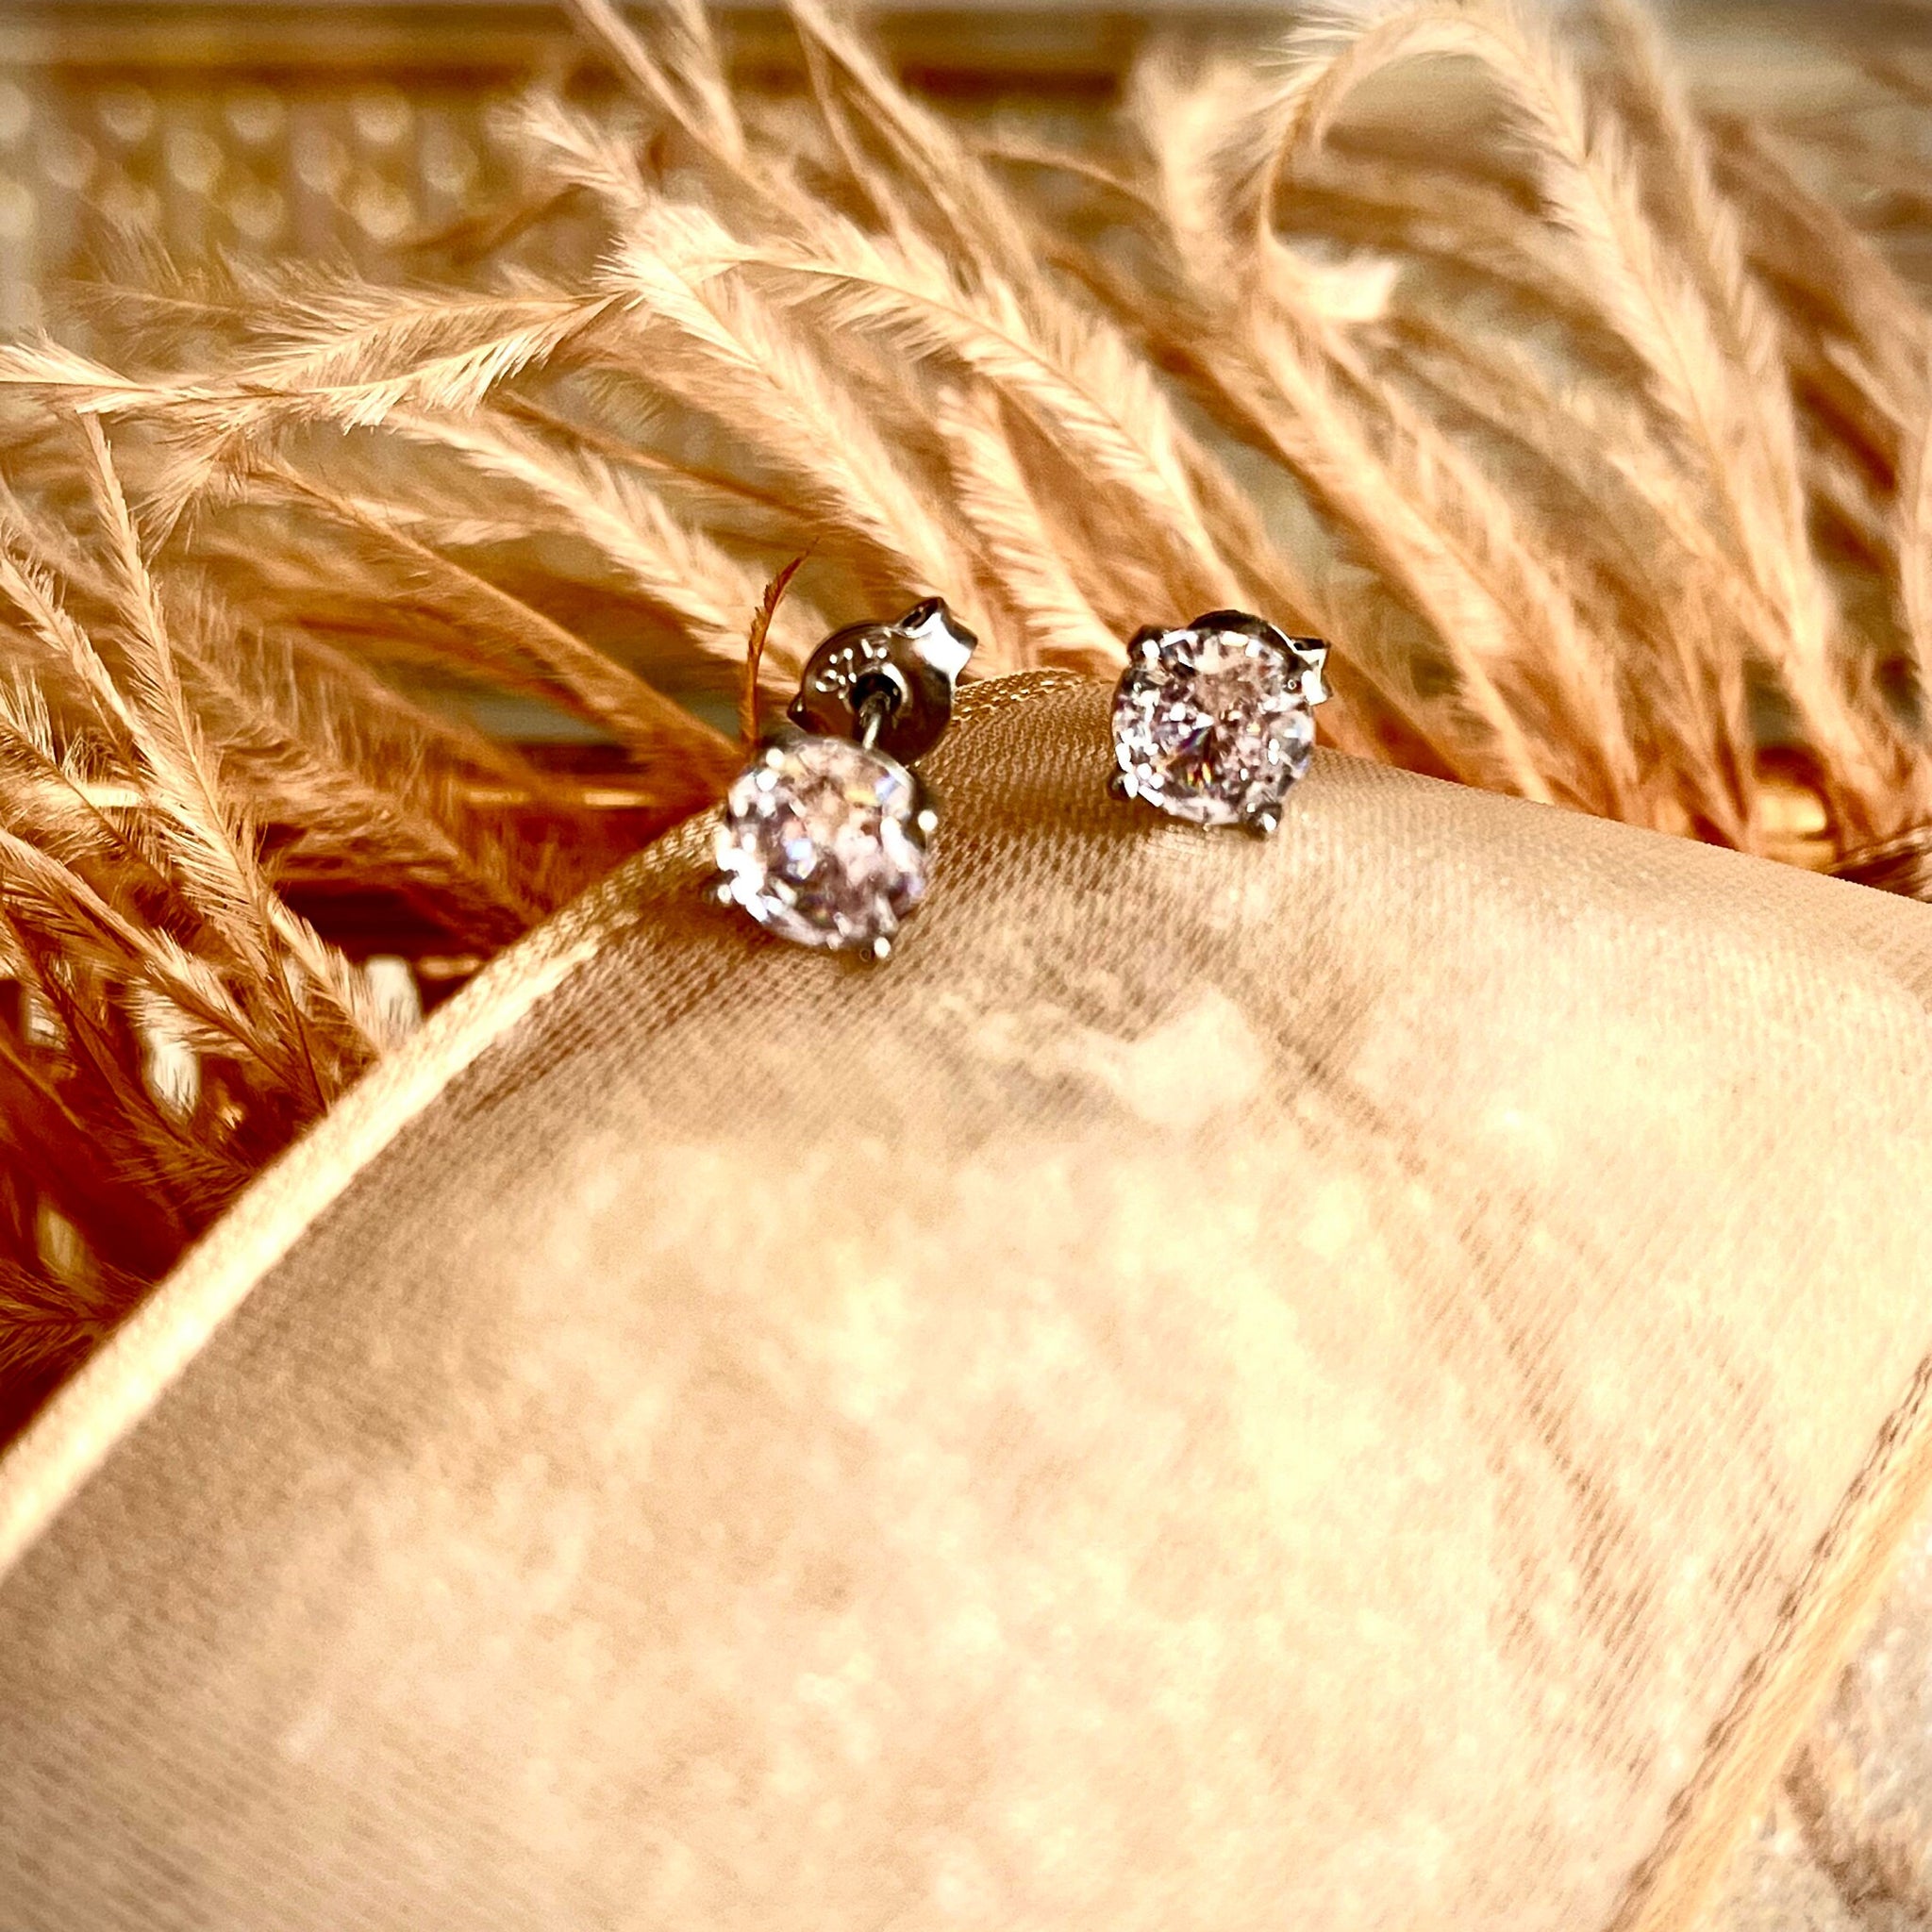 CZ Diamond Stud Earrings 4 mm April Birthstone Moissanite Lab Stud Diamond Earrings Crystal Earrings Tiny Diamond Earrings Gift For Her